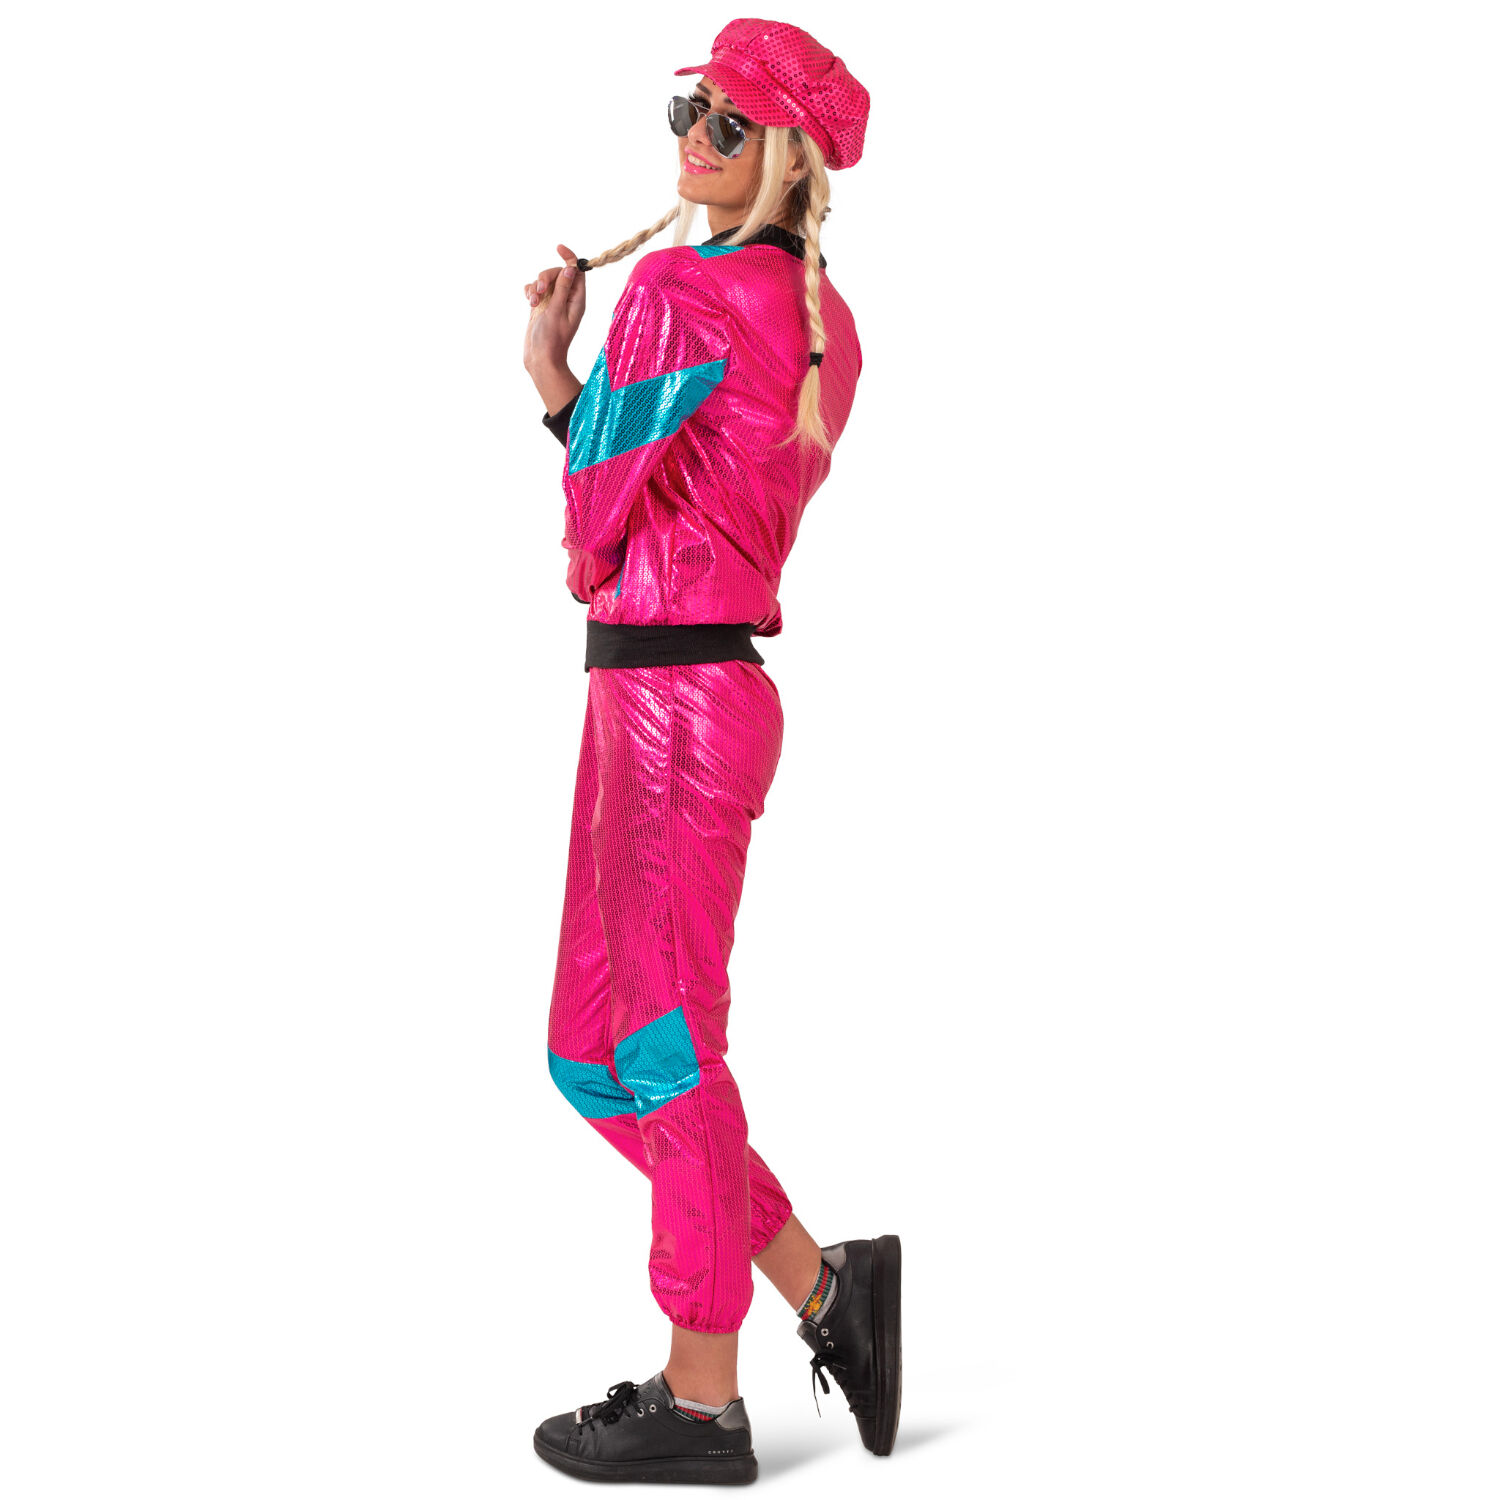 NEU Jogging-Anzug Patsy, Pink-Blau-Metallic, Gre 36-38 Bild 3